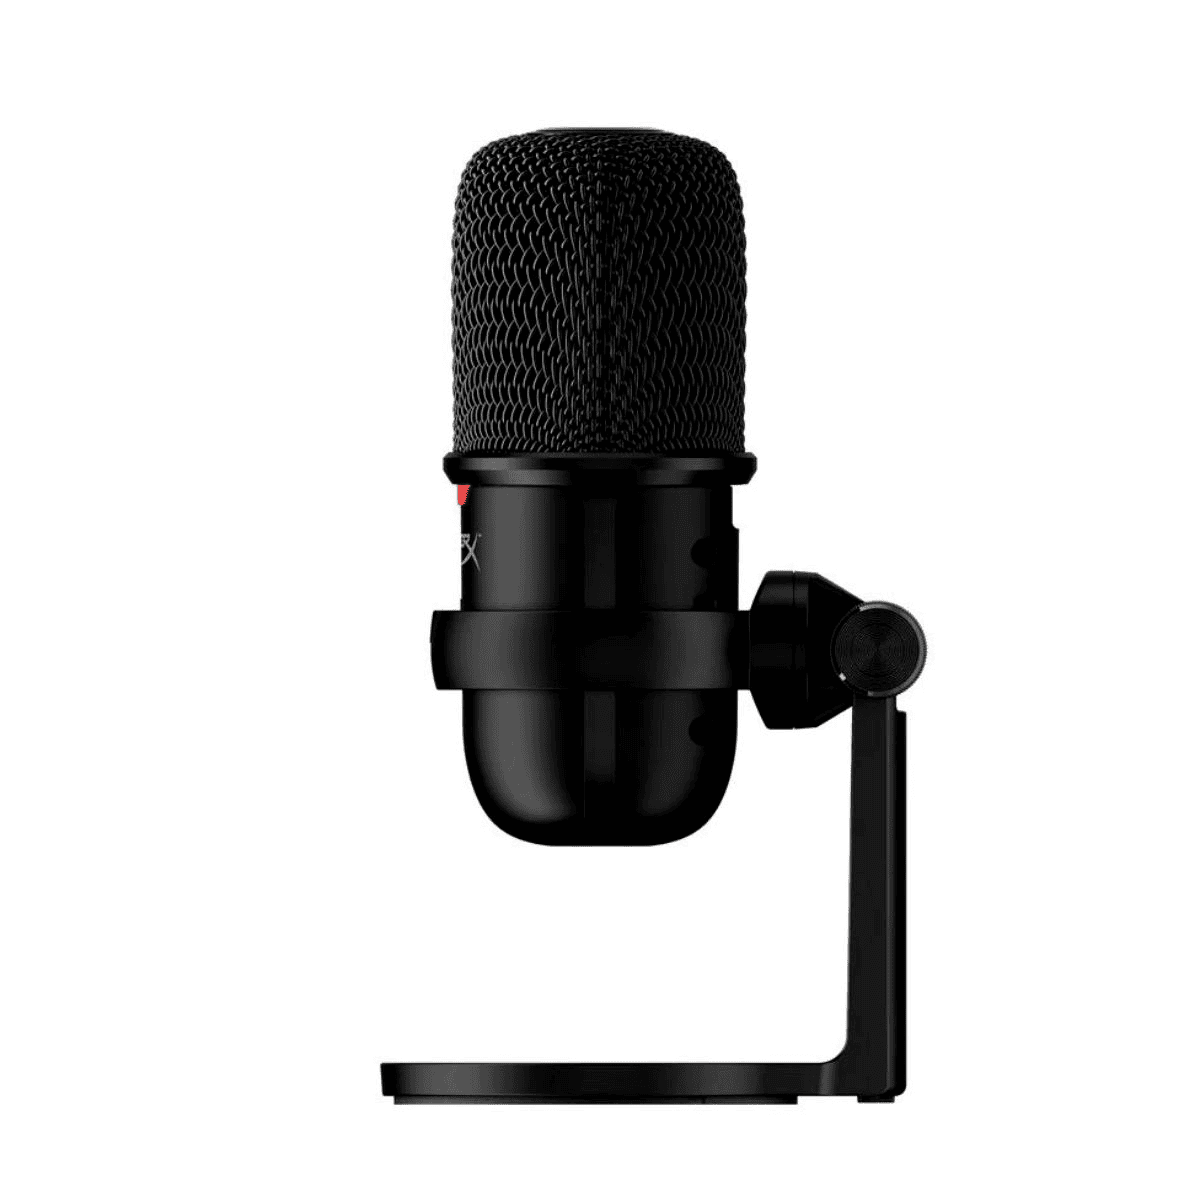 HyperX Microphone 4P5P8AA Black